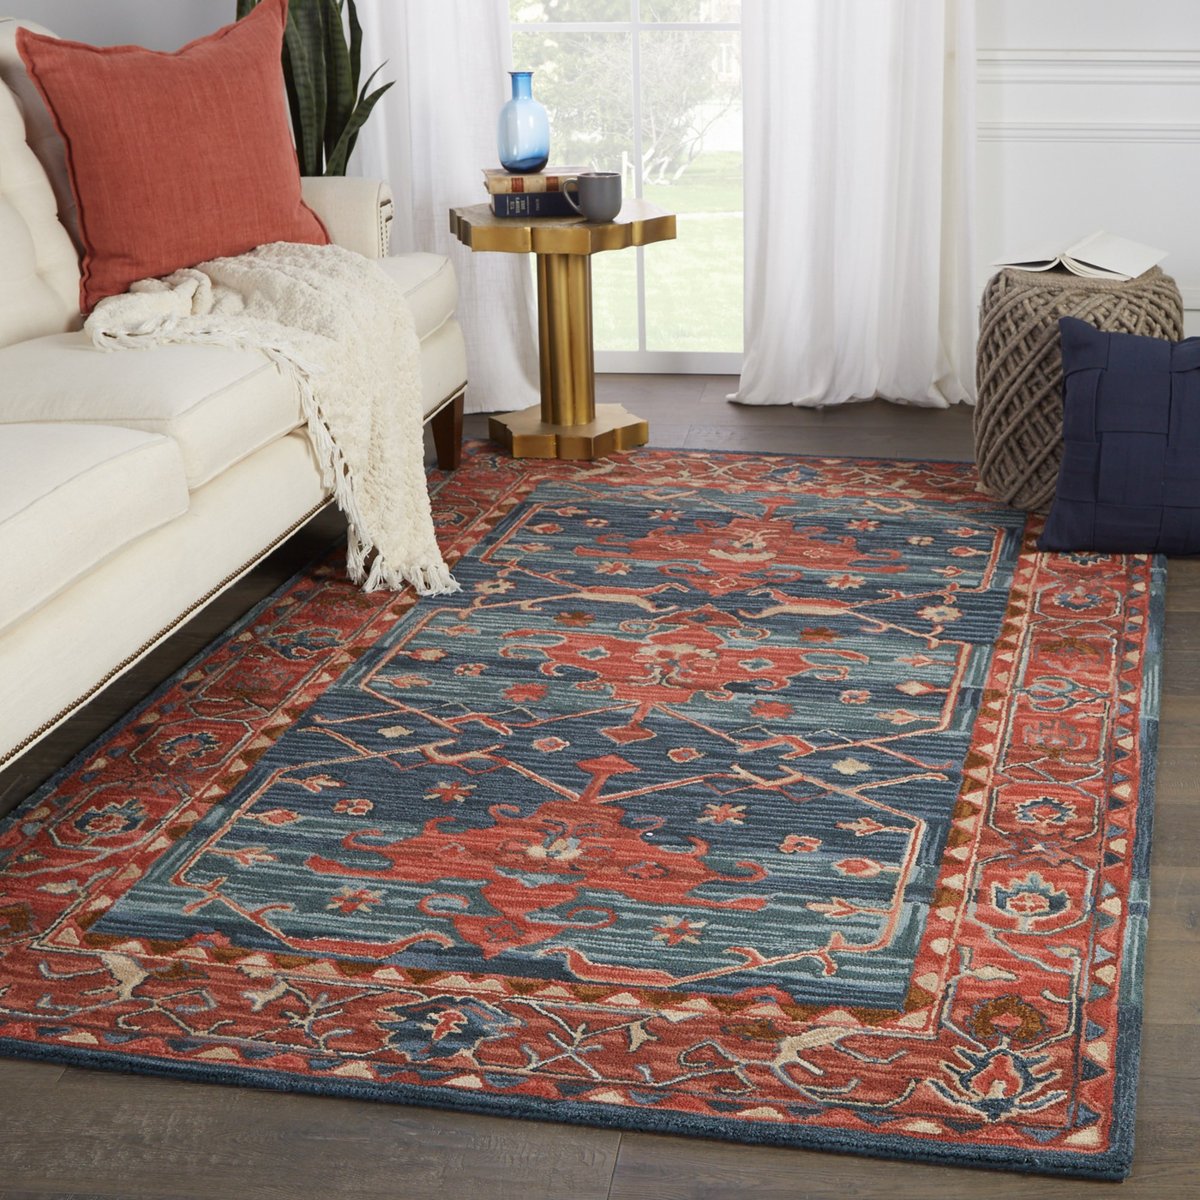 Trataional Oriental Turkish Area rug living room carpet flooring 